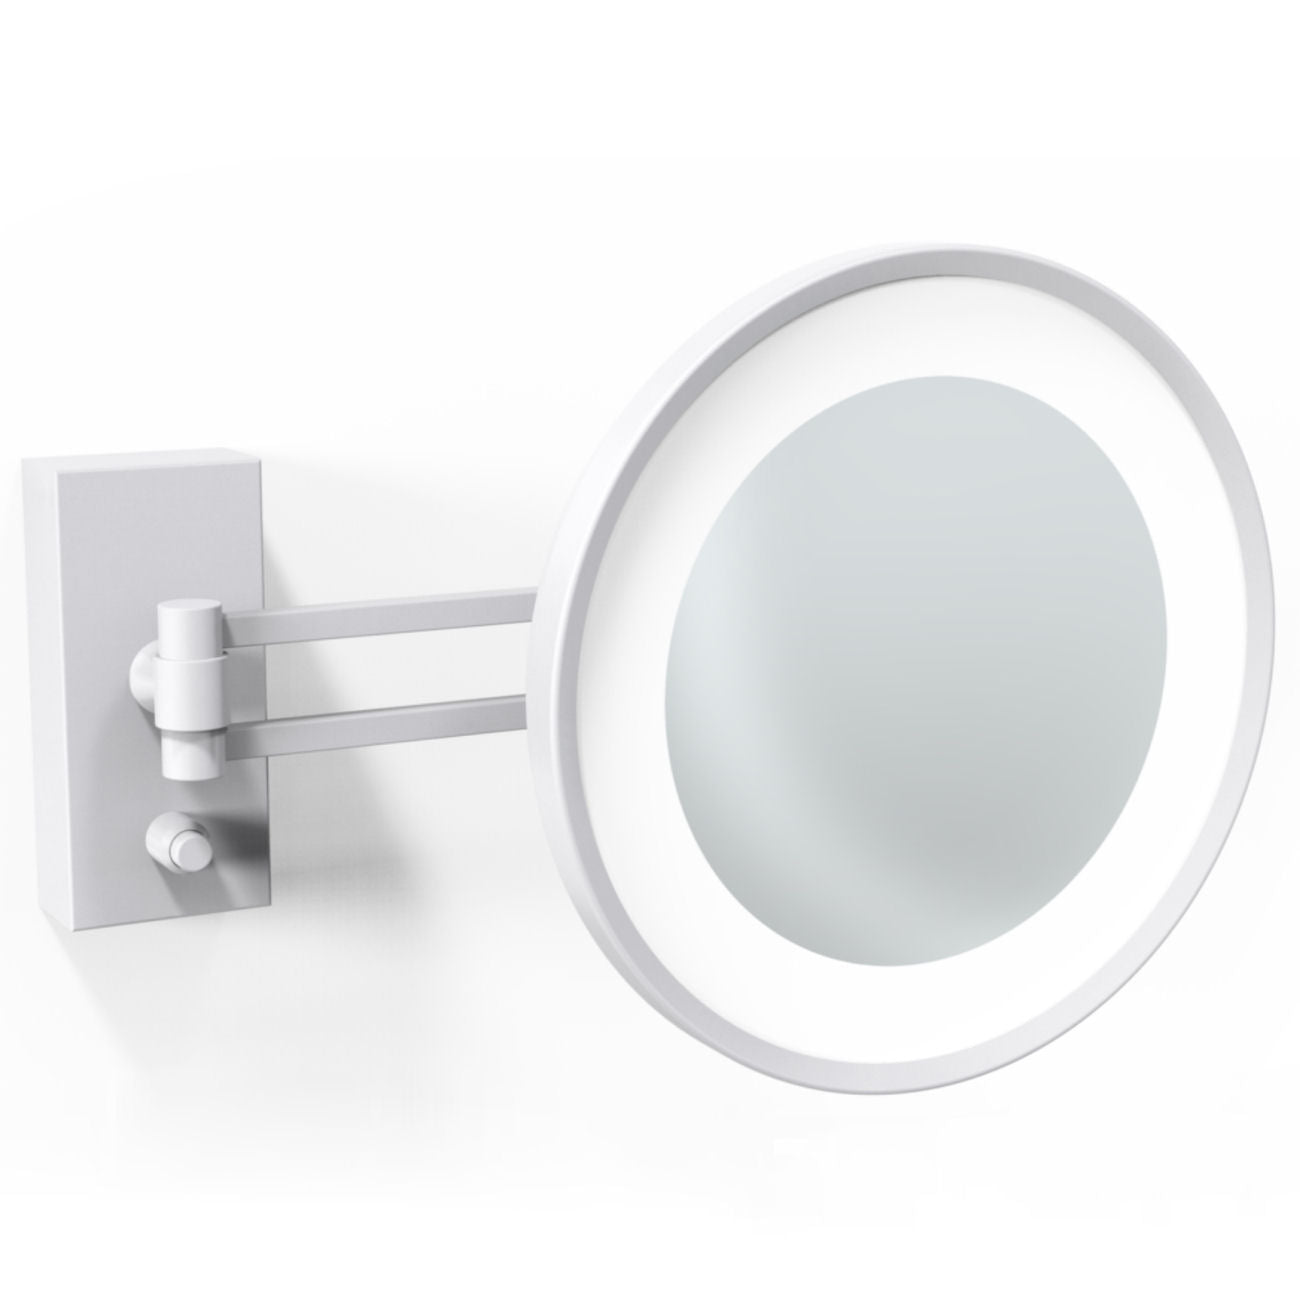 Matt White Wall-mounted Cosmetic Mirror by Decor Walther - |VESIMI Design|